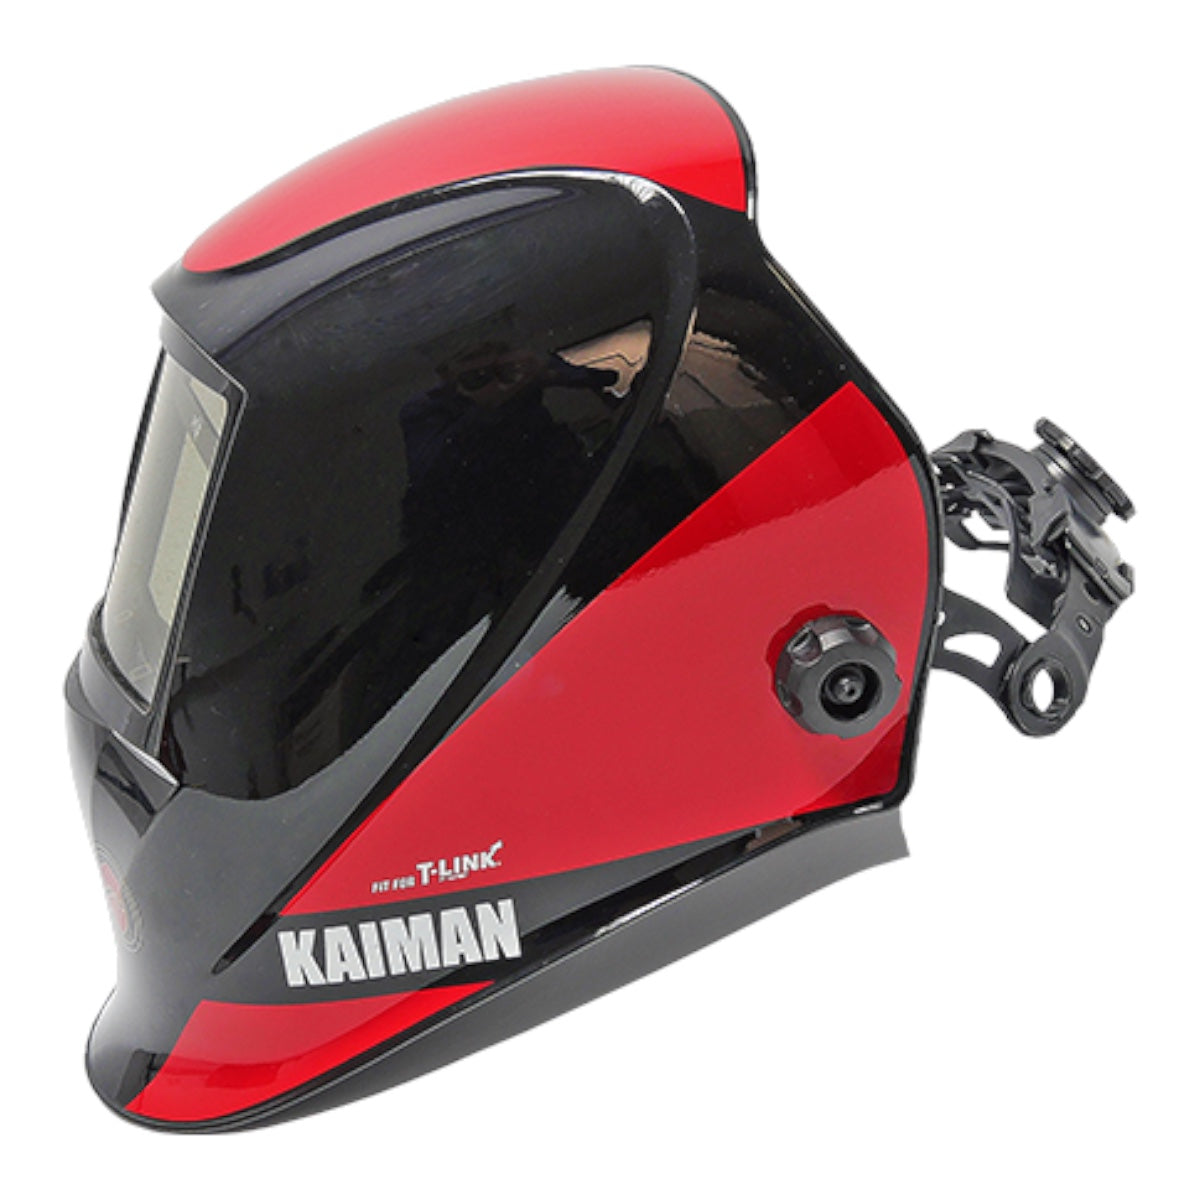 Kaiman automatic welding helmet